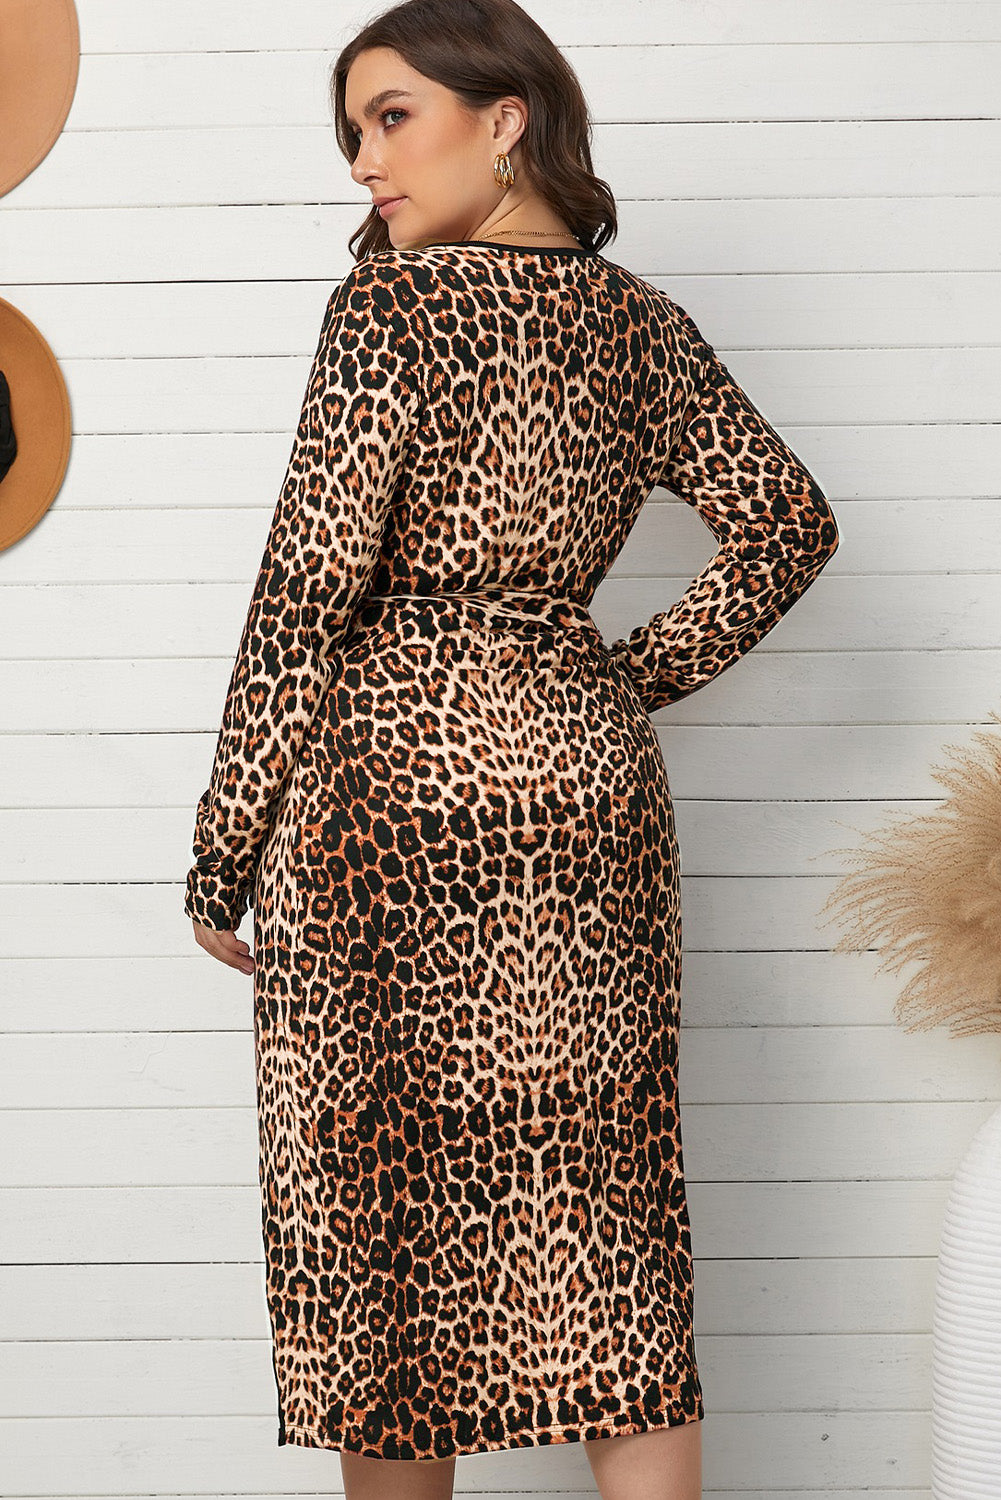 Plus Size Surplice Wrap Dress with Leopard Print